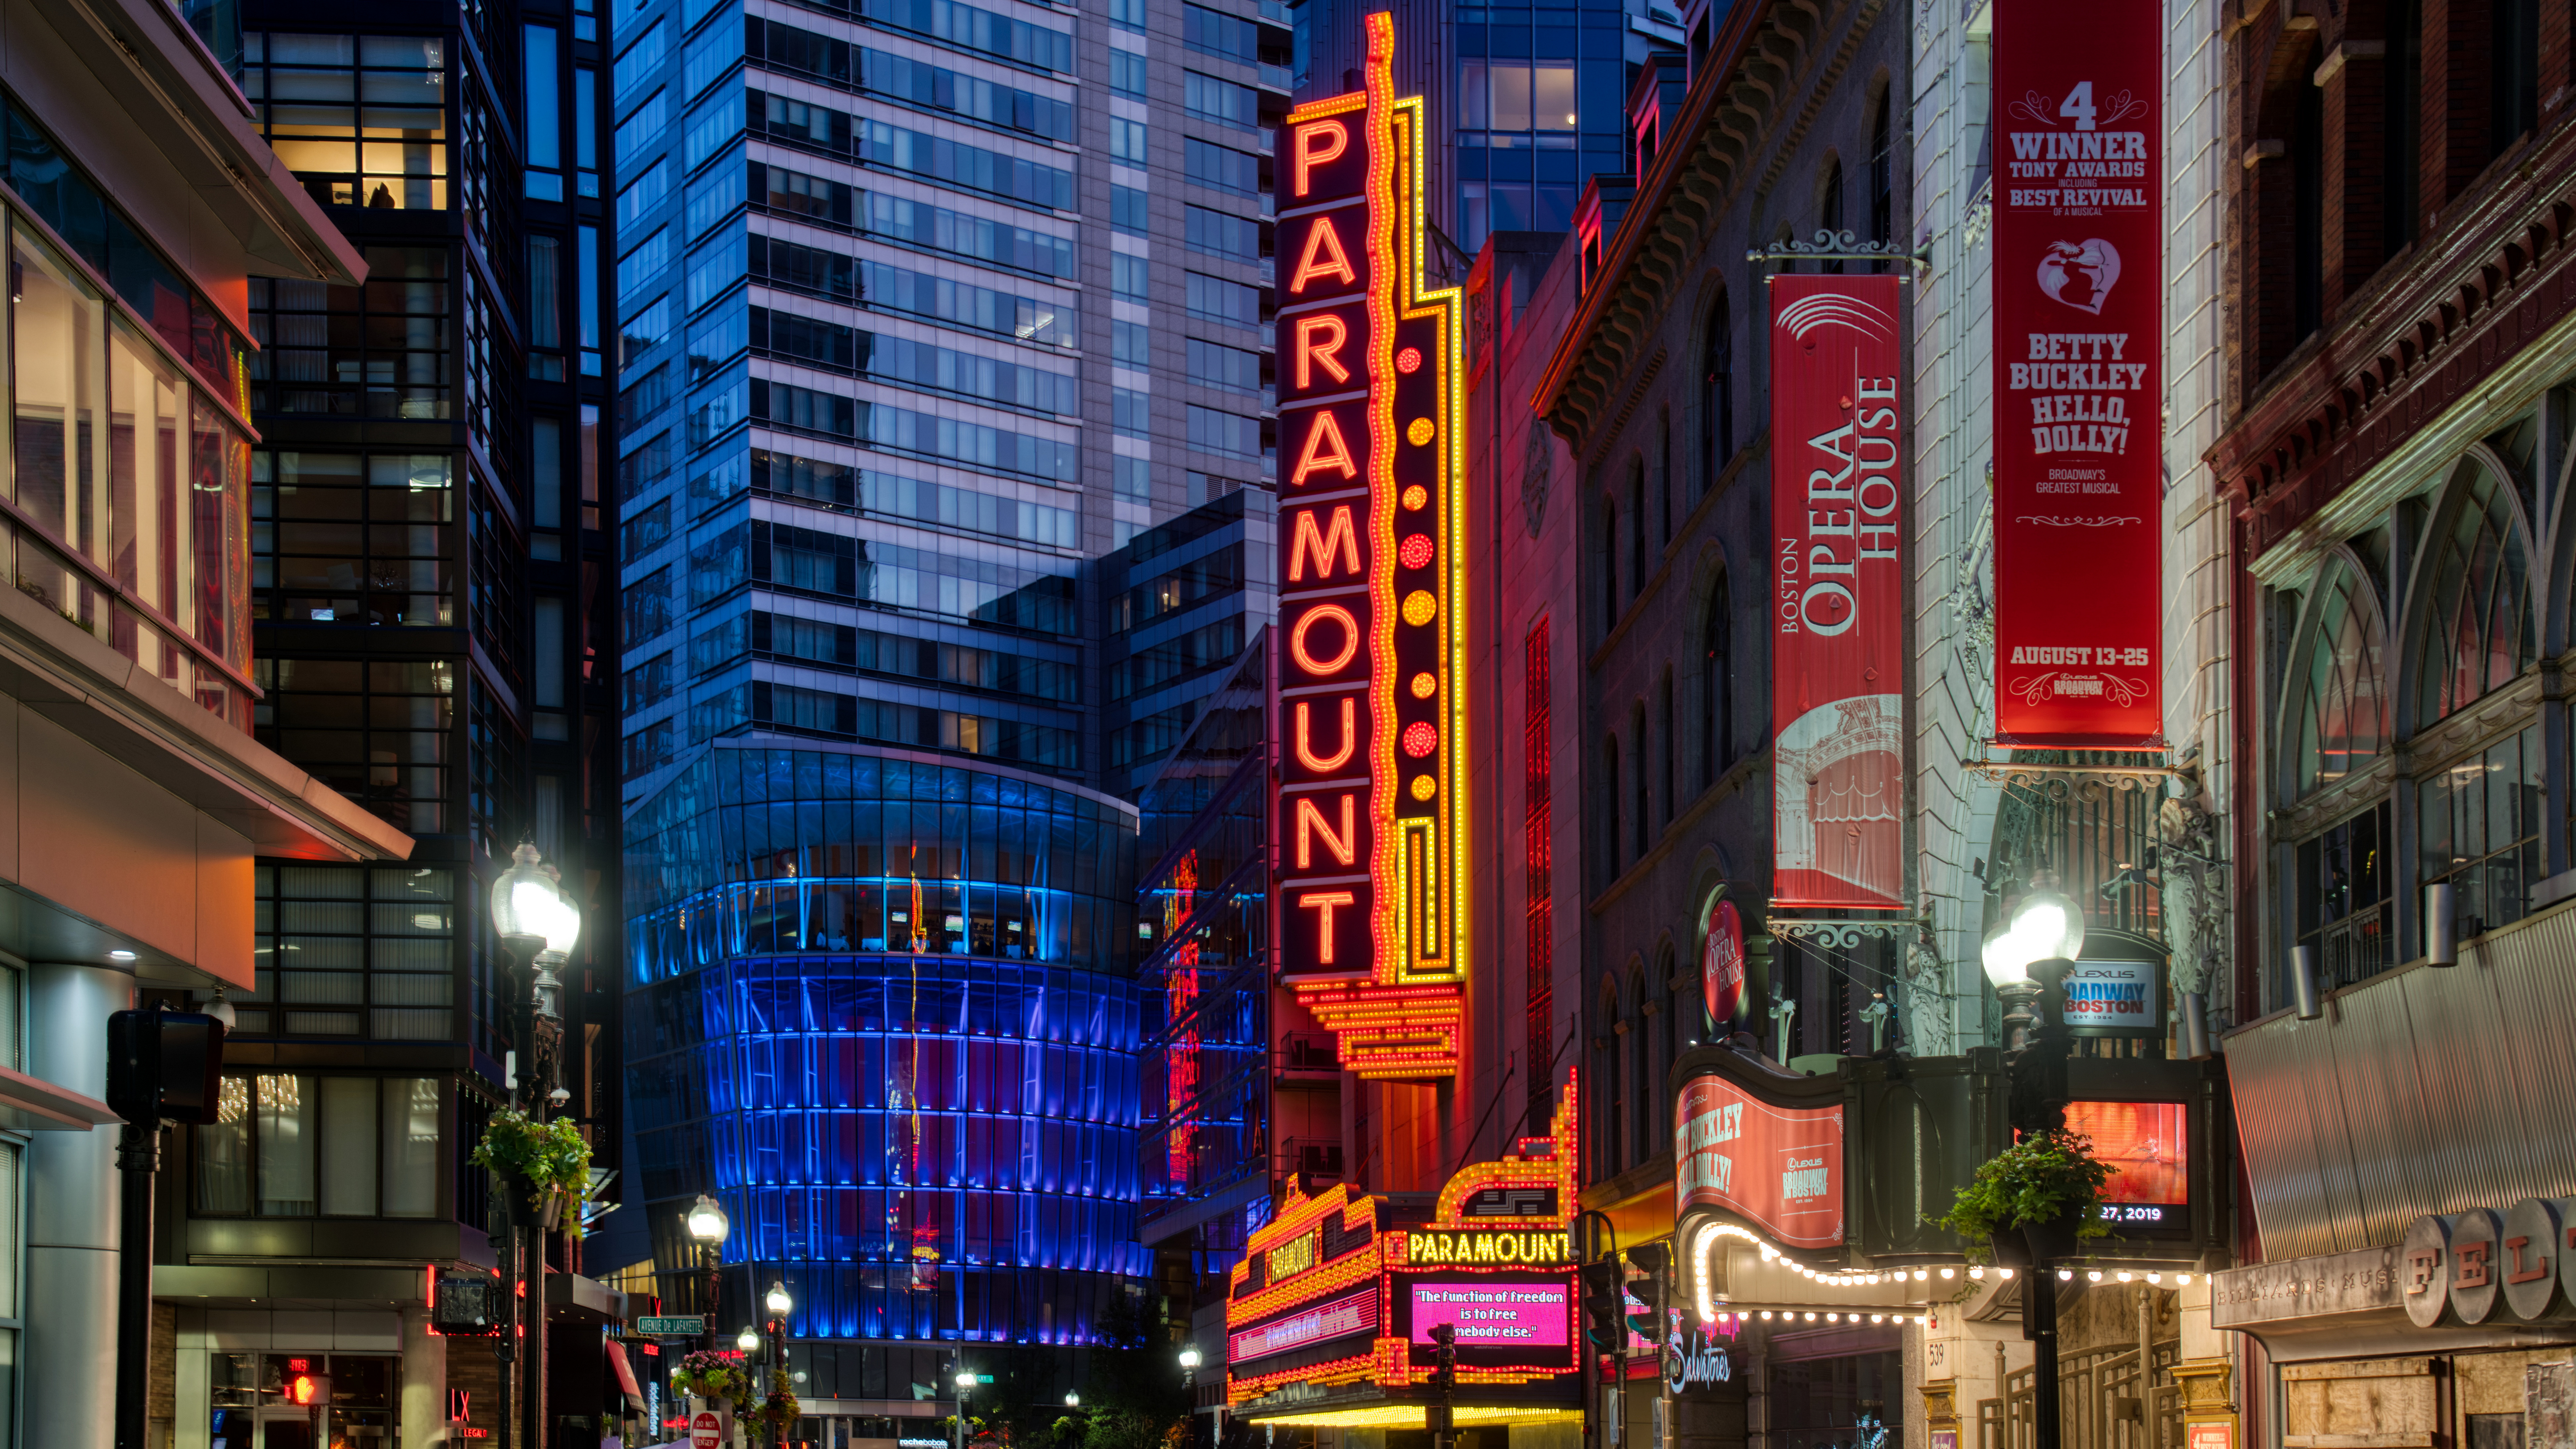 General 7680x4320 photography Trey Ratcliff cityscape night lights building theaters Massachusetts USA Boston